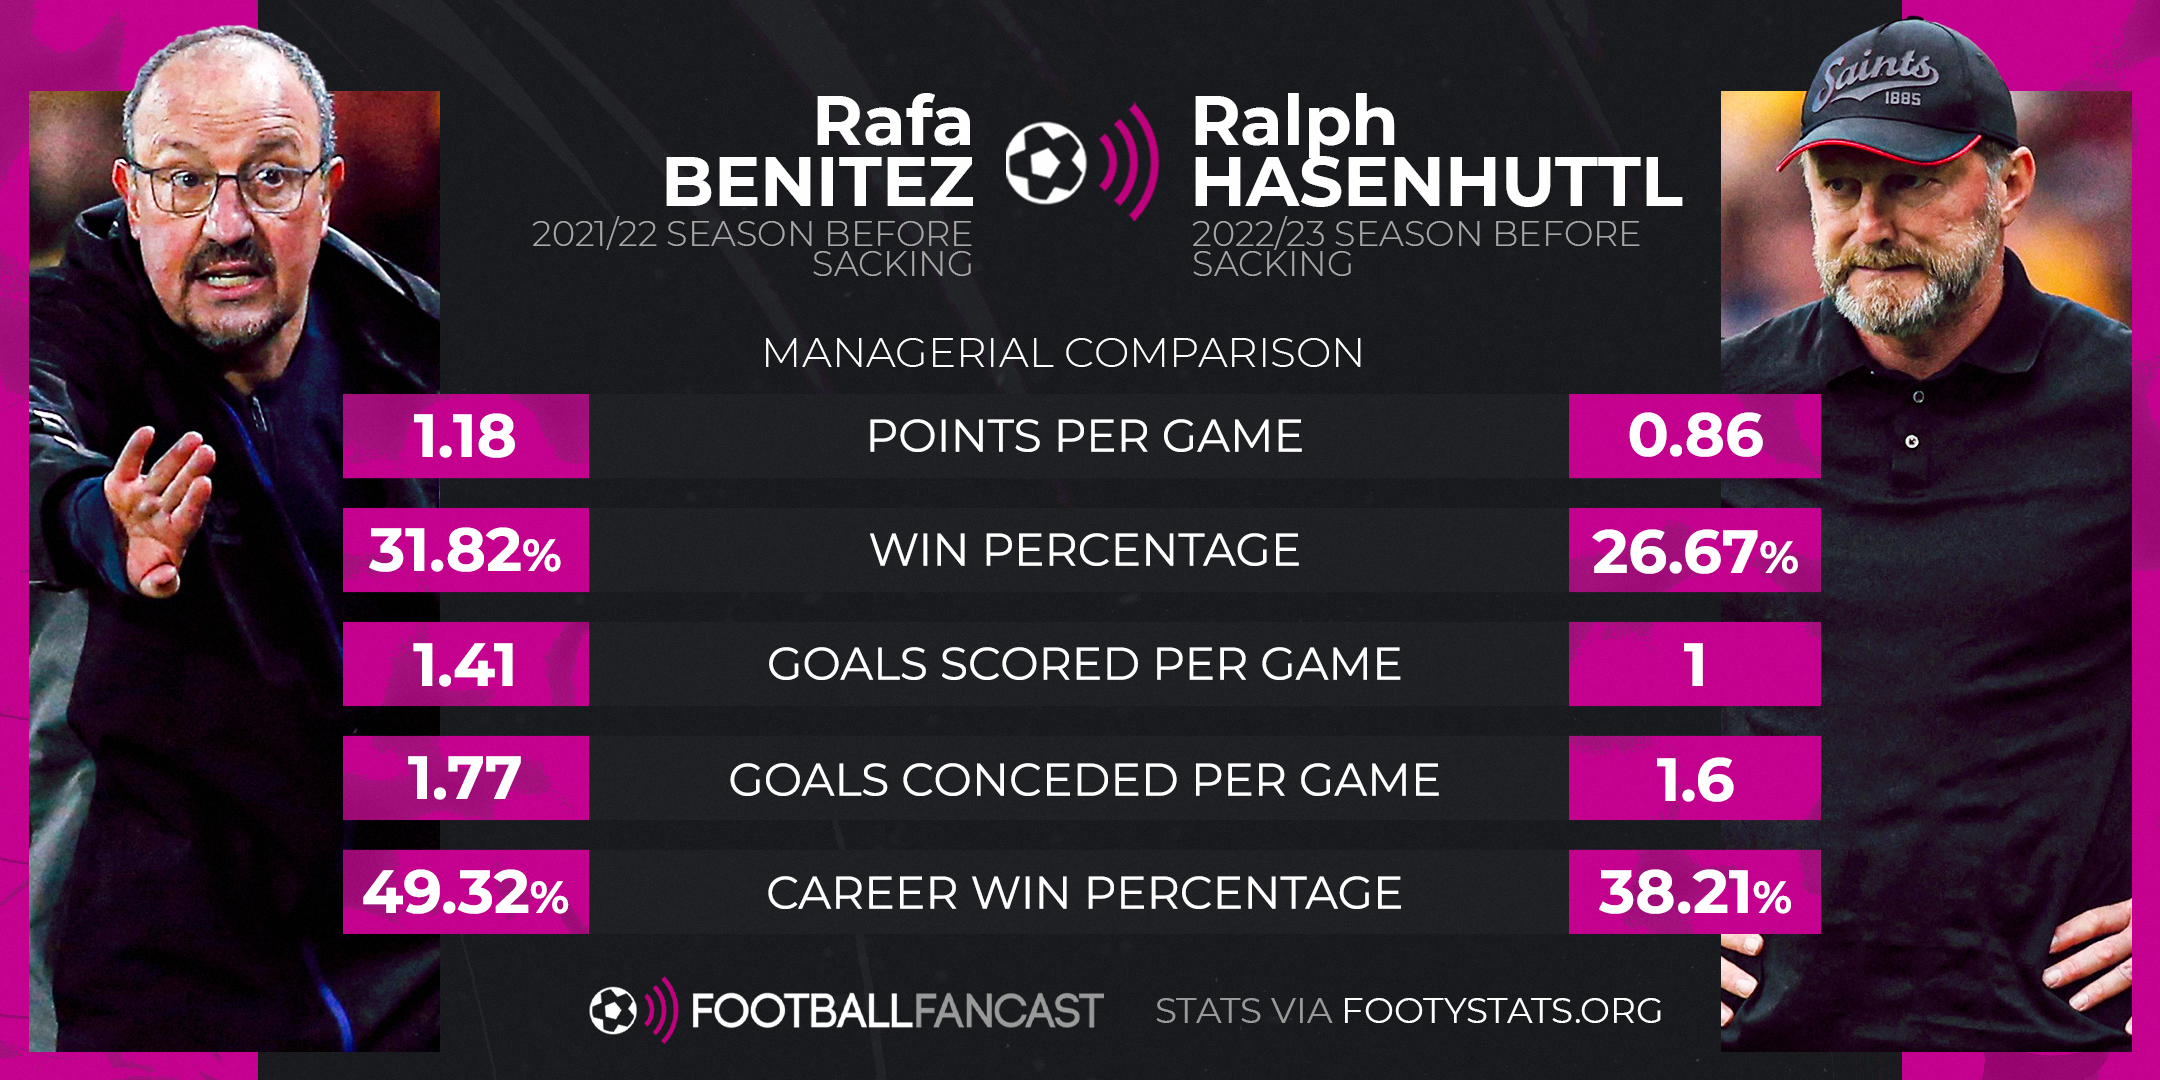 Rafa Benitez and Ralph Hasenhuttl